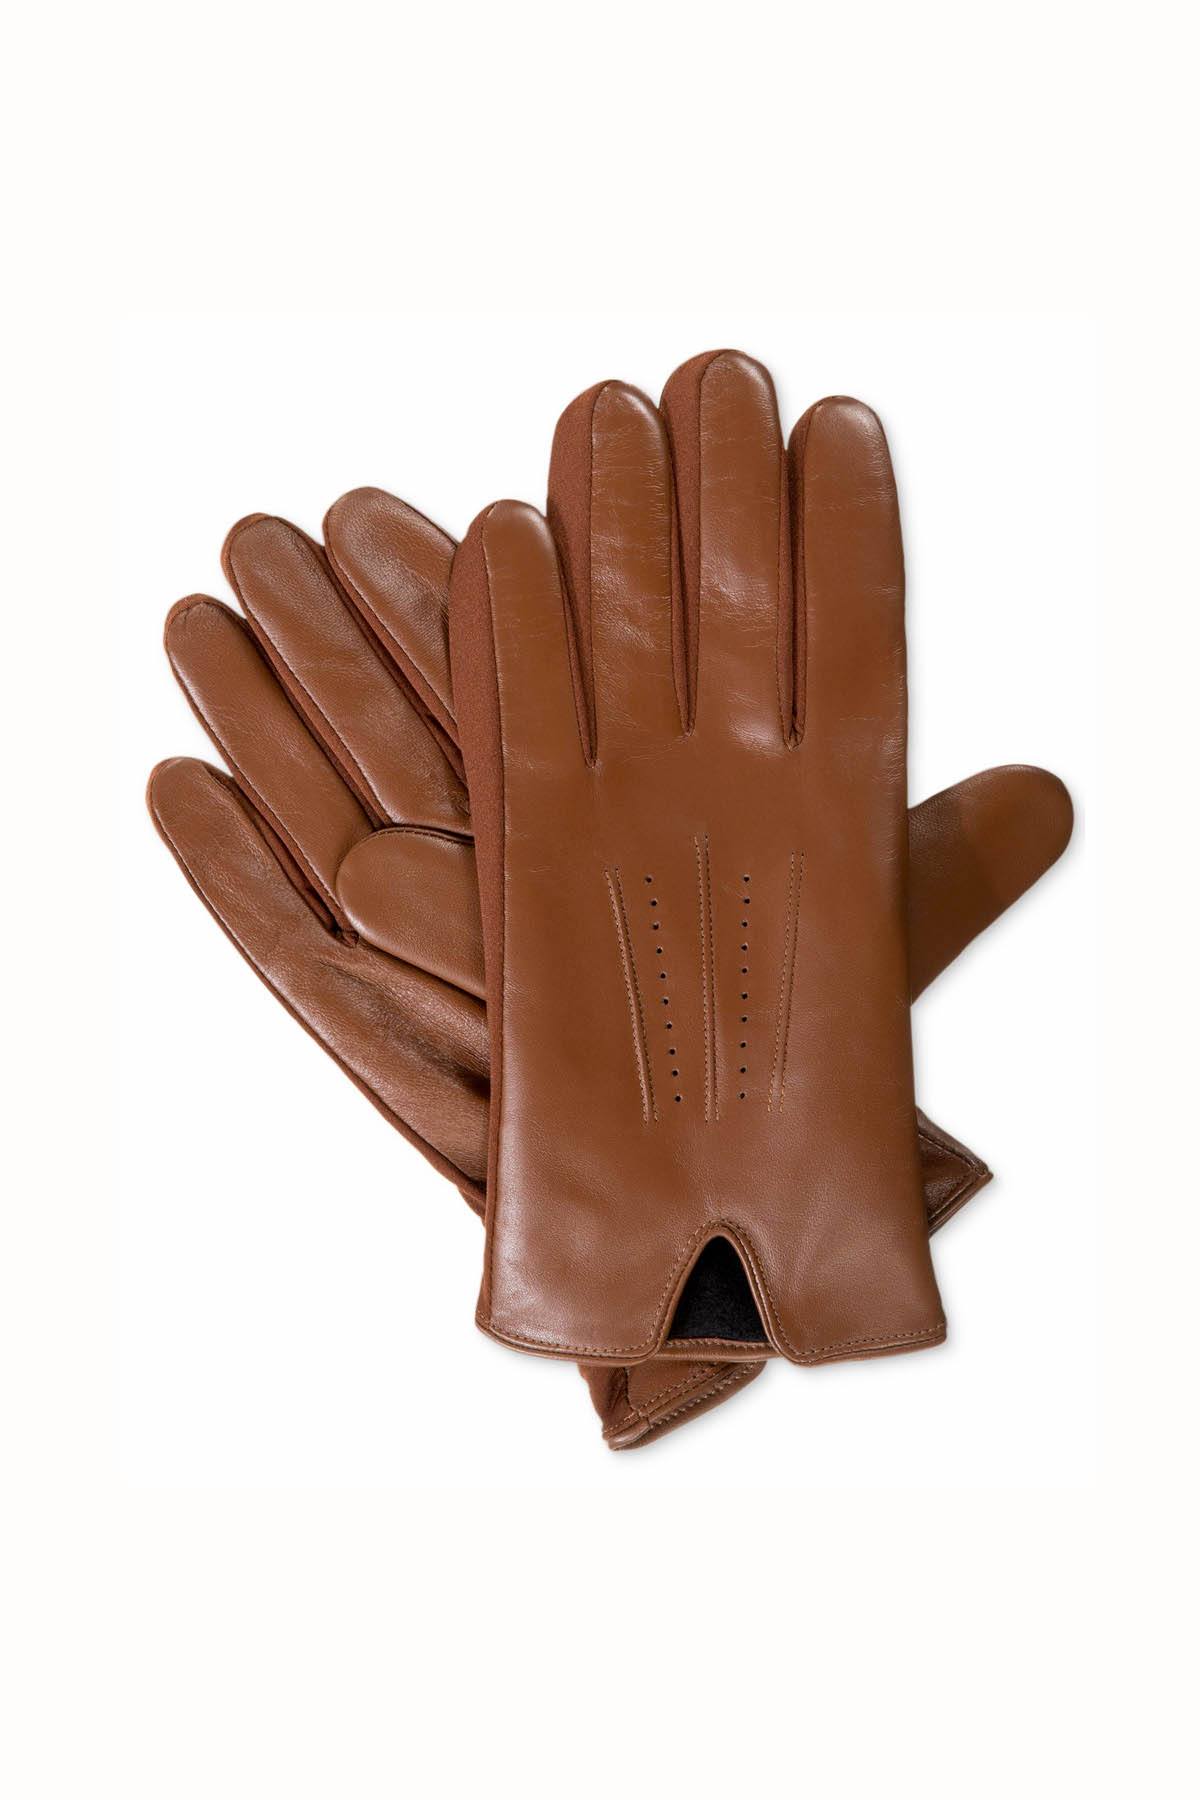 Isotoner Signature Luggage-Brown Leather Gloves - Medium